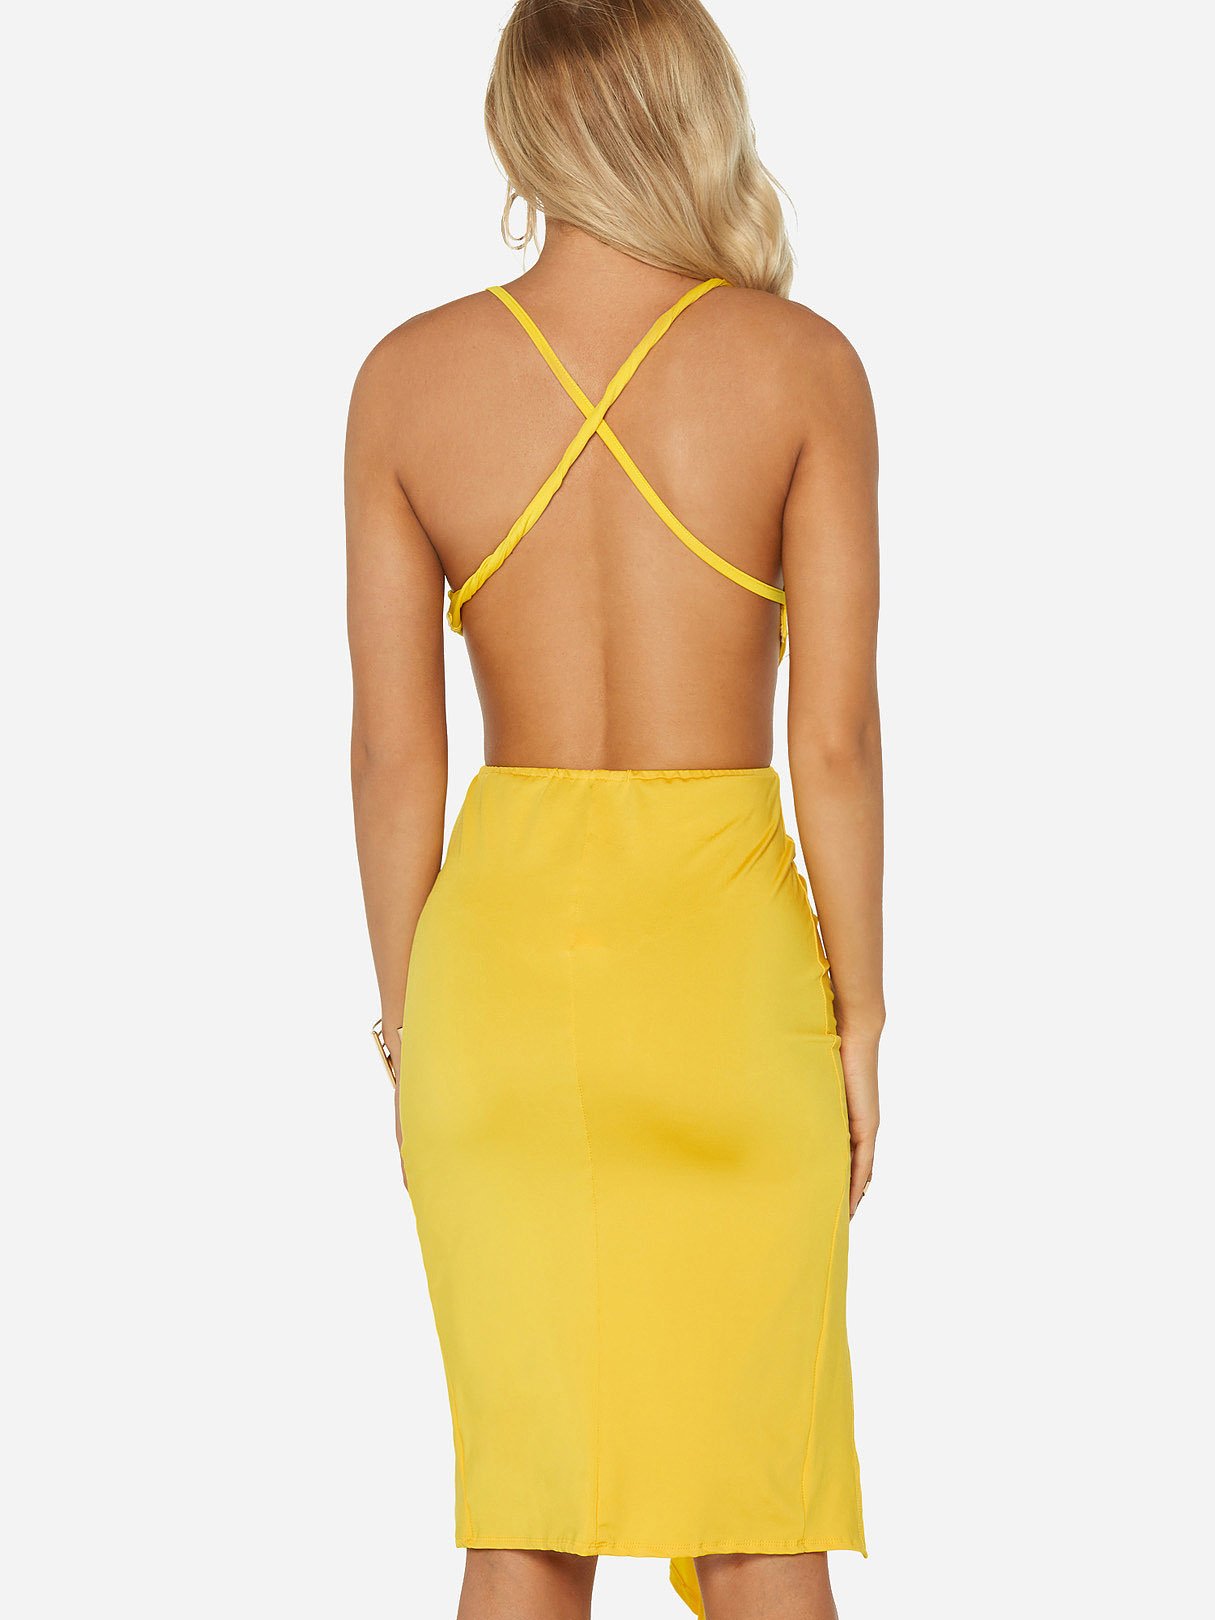 NEW FEELING Womens Yellow Sexy Dresses